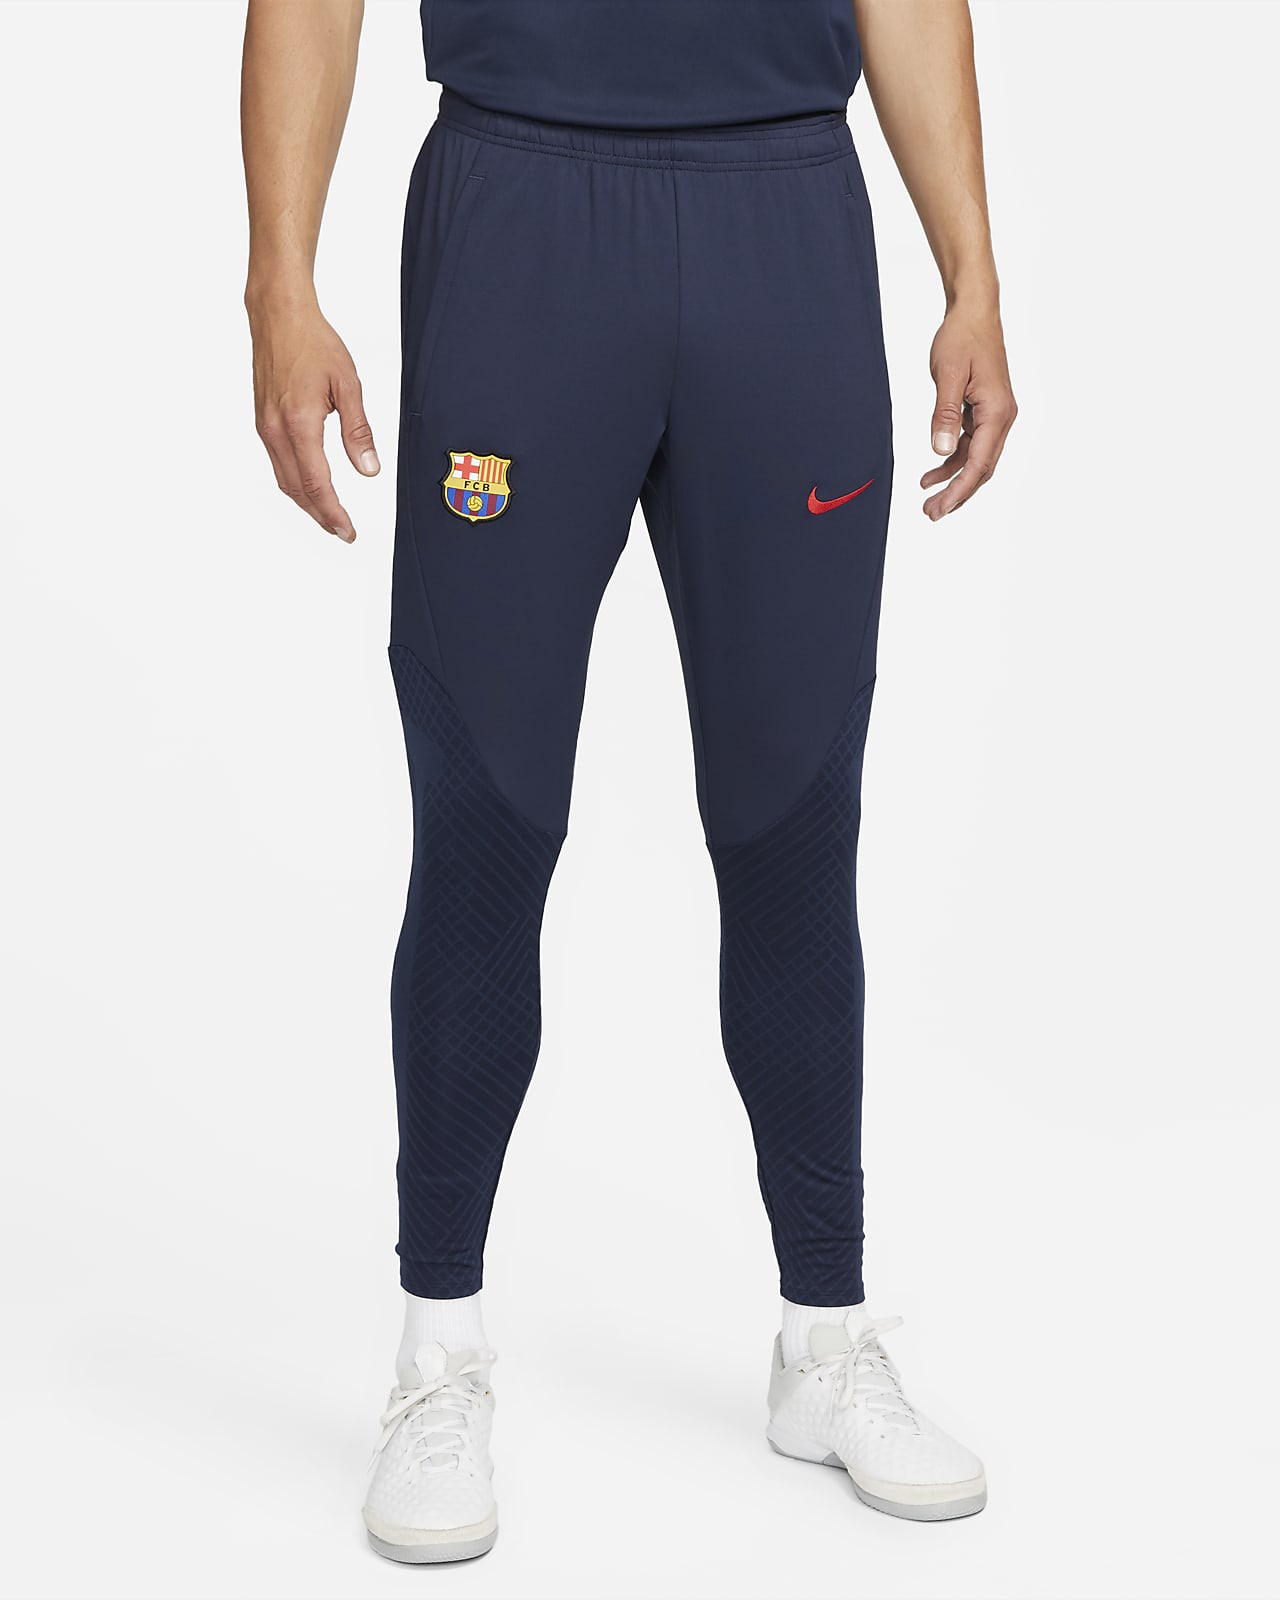 Habitual mercado Nos vemos mañana Pants de fútbol para hombre Nike Dri-FIT del FC Barcelona Strike. Nike.com